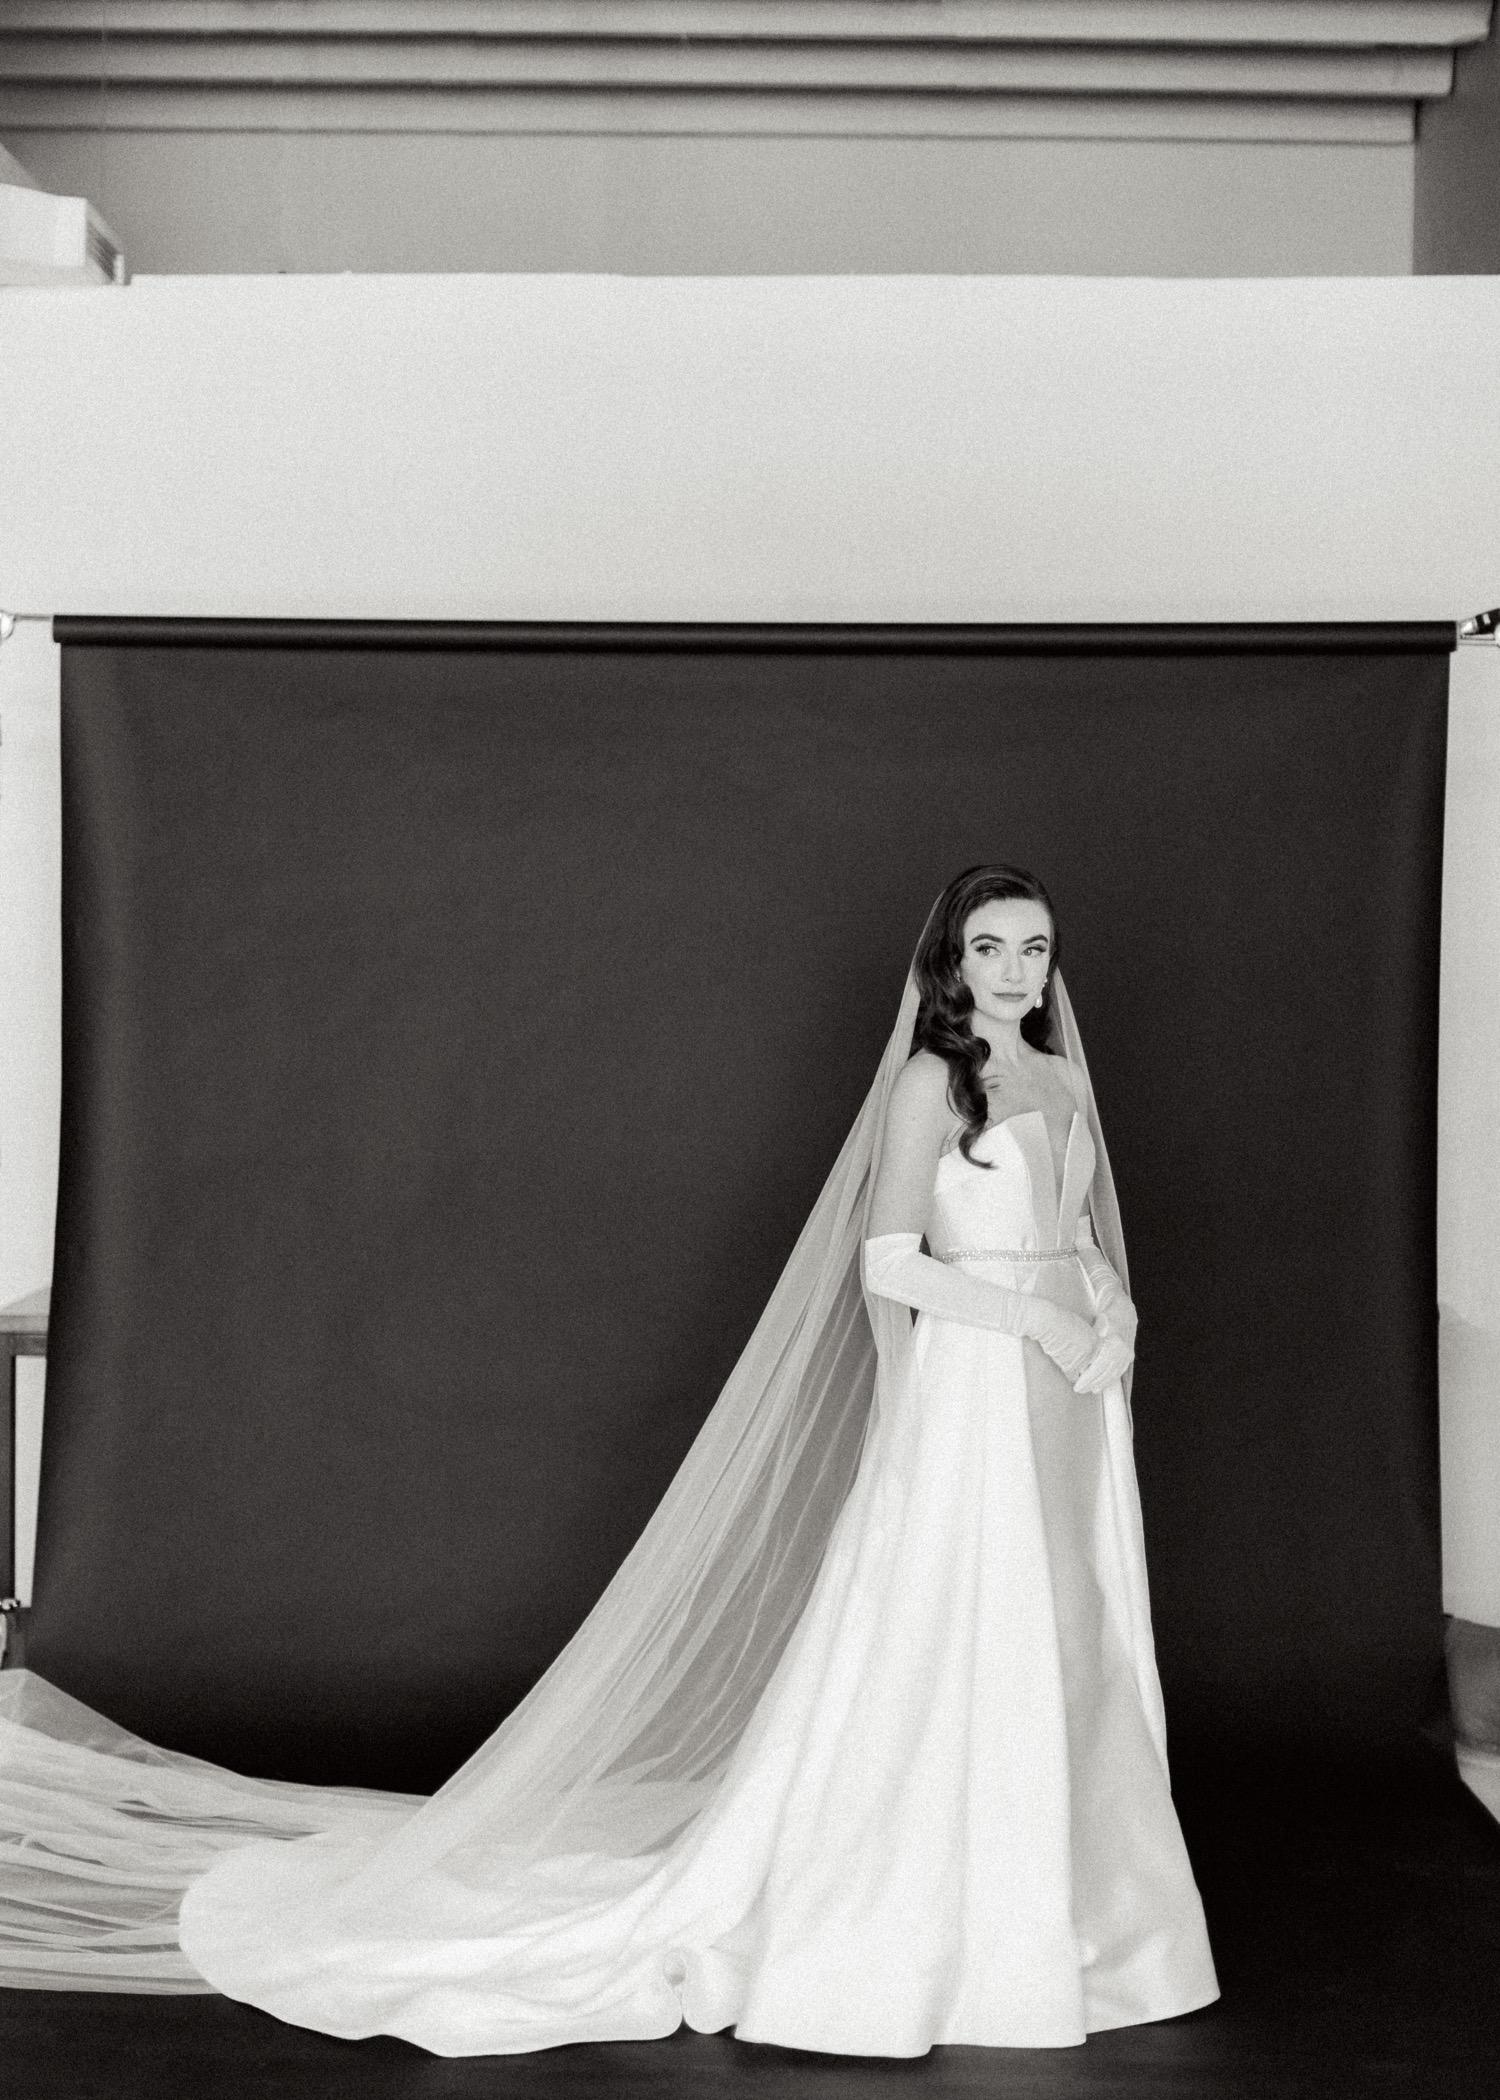 https://fetch.getnarrativeapp.com/static/b55a5091-1c14-4f36-8bad-89dbb4762631/Bride-in-white-Galia-Lahav-wedding-dress,-overskirt,-gloves,-and-veil-during-studio-bridal-session-with-black-backdrop.jpg?w=1500